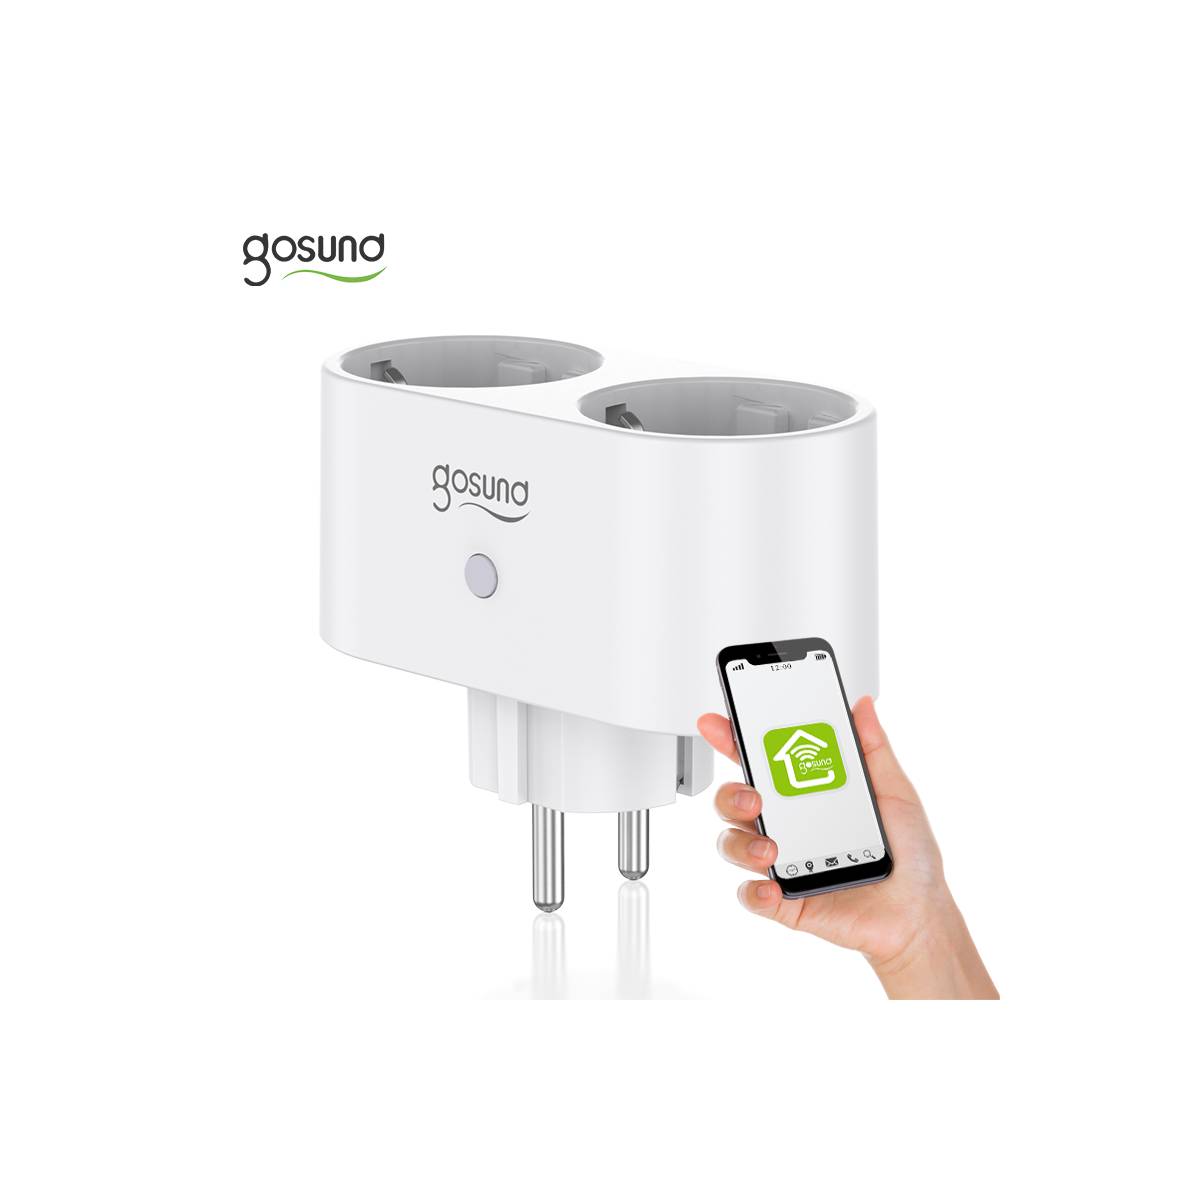 Gosund smart dobbelt strømstik med Wi-Fi - Alexa, Home -